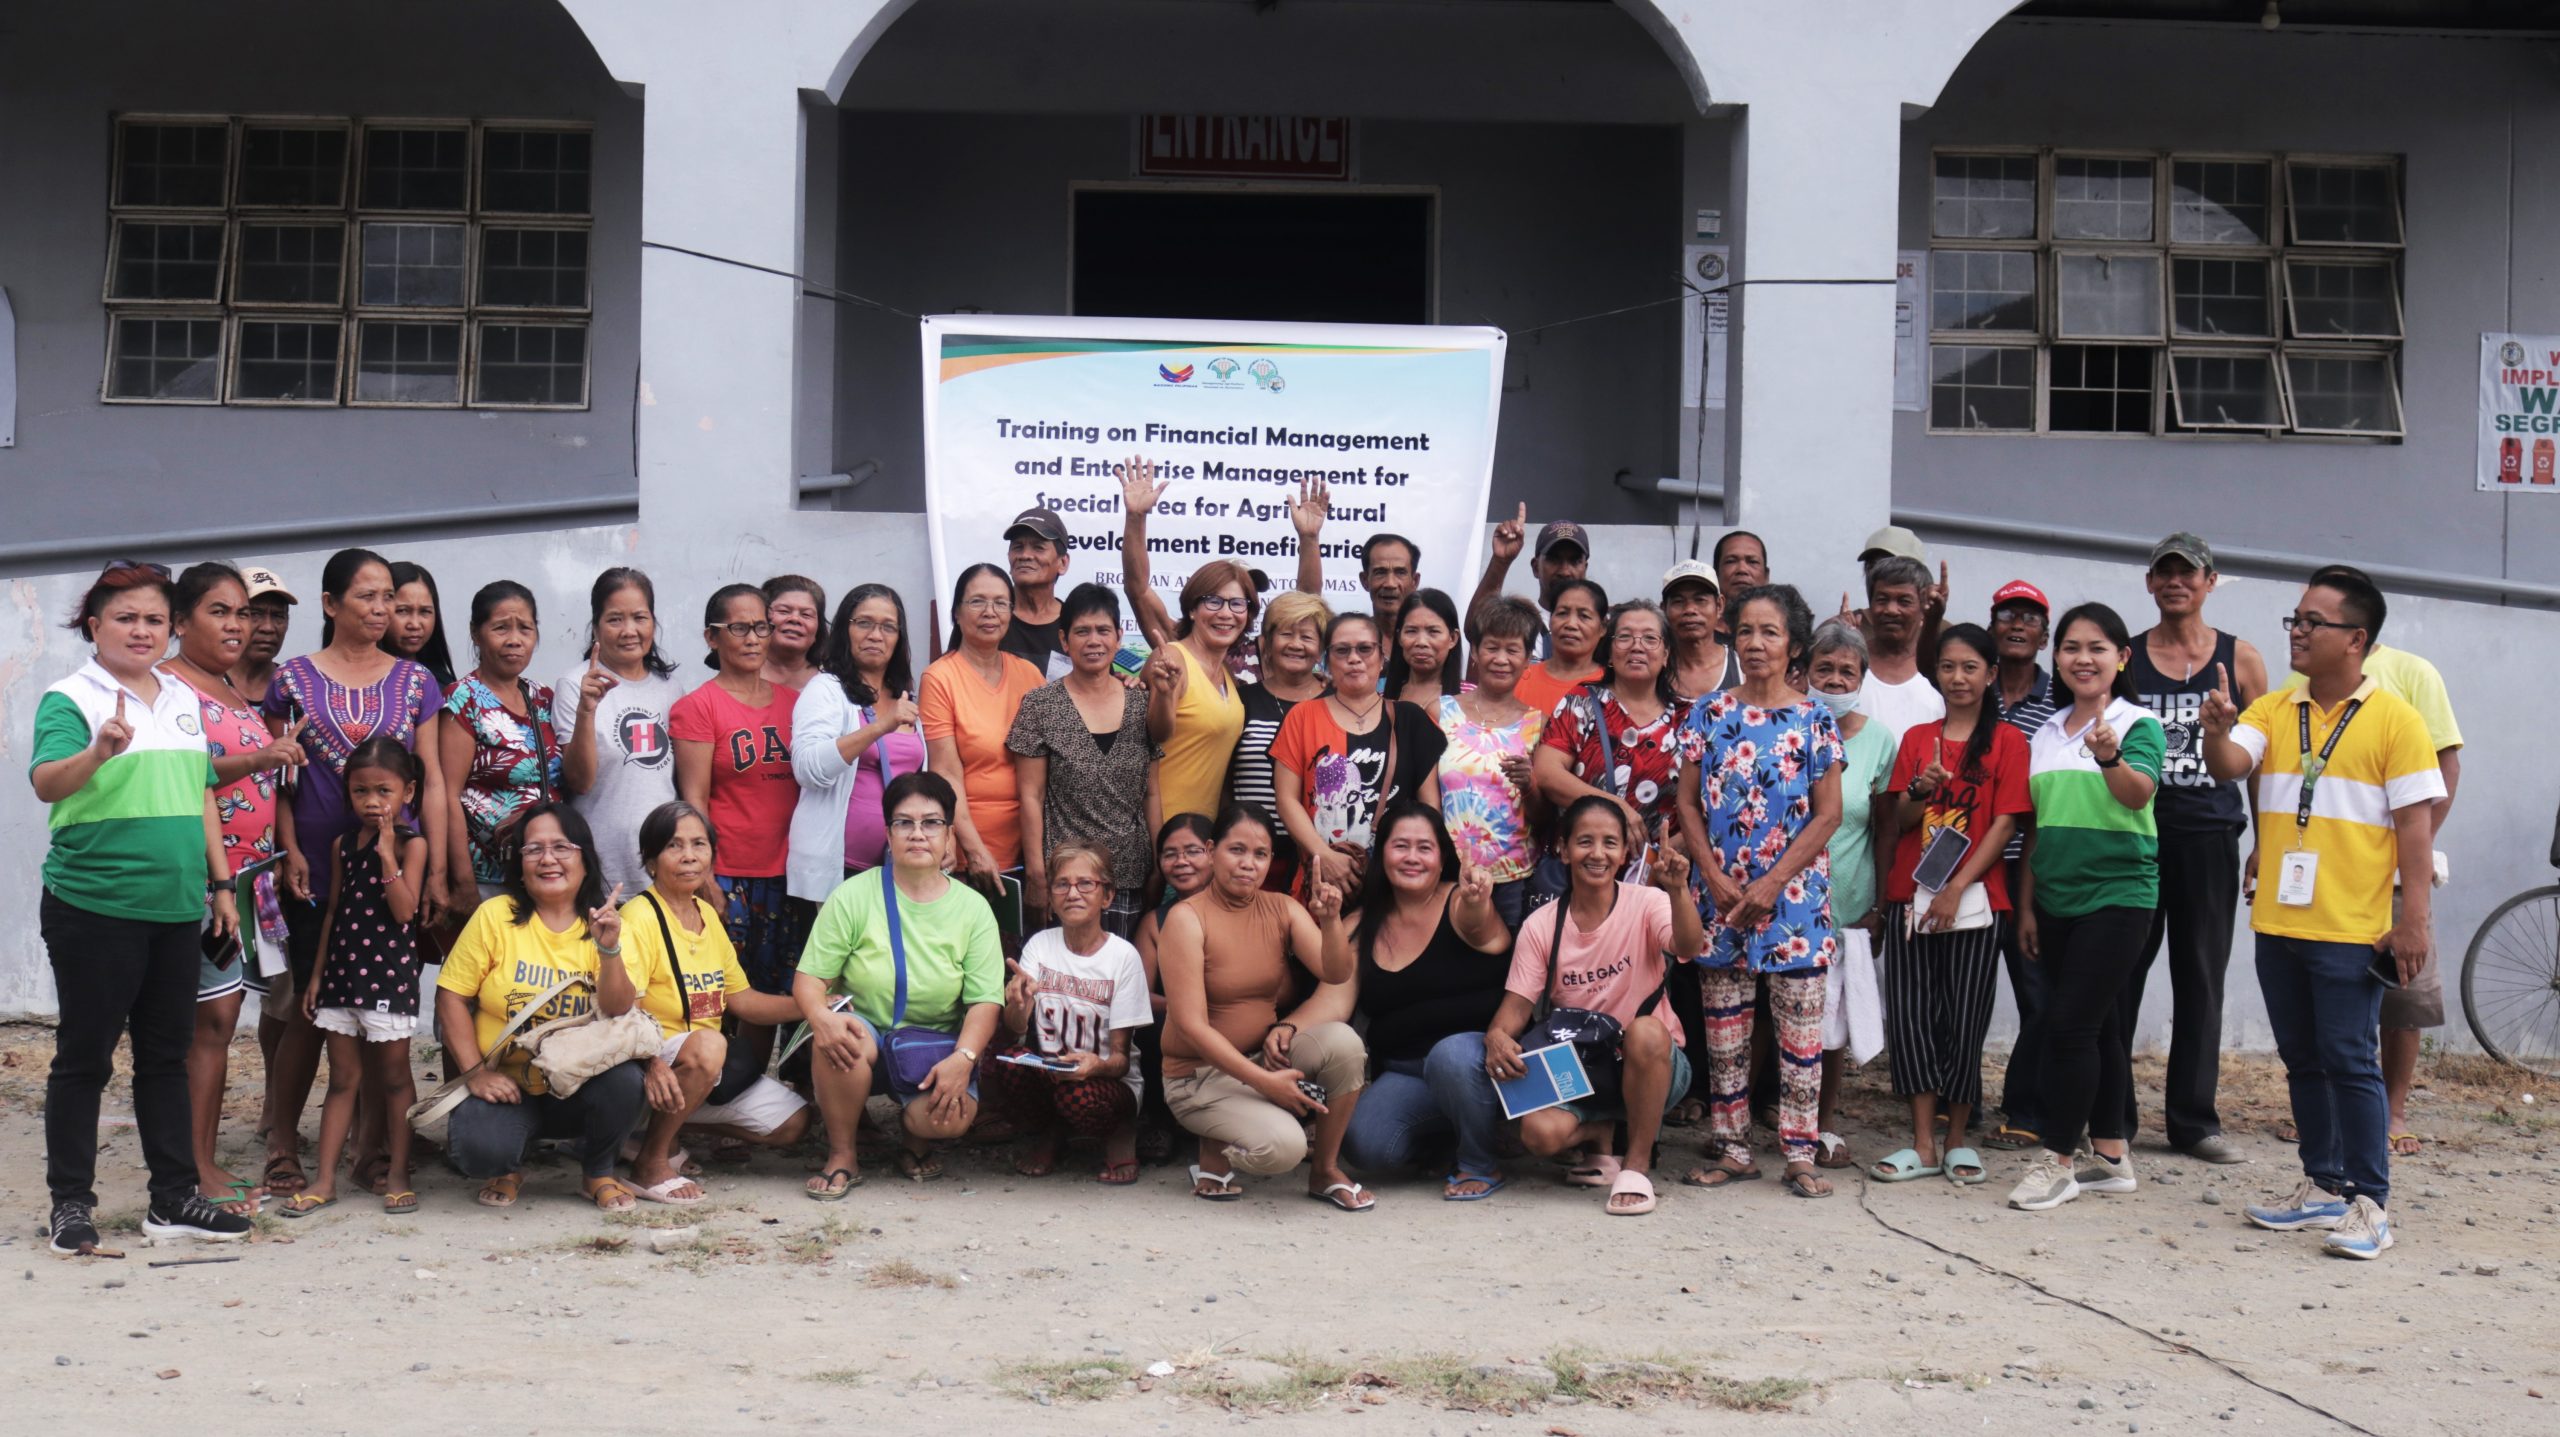 184 farmers in Ilocos Region underwent financial, enterprise management training